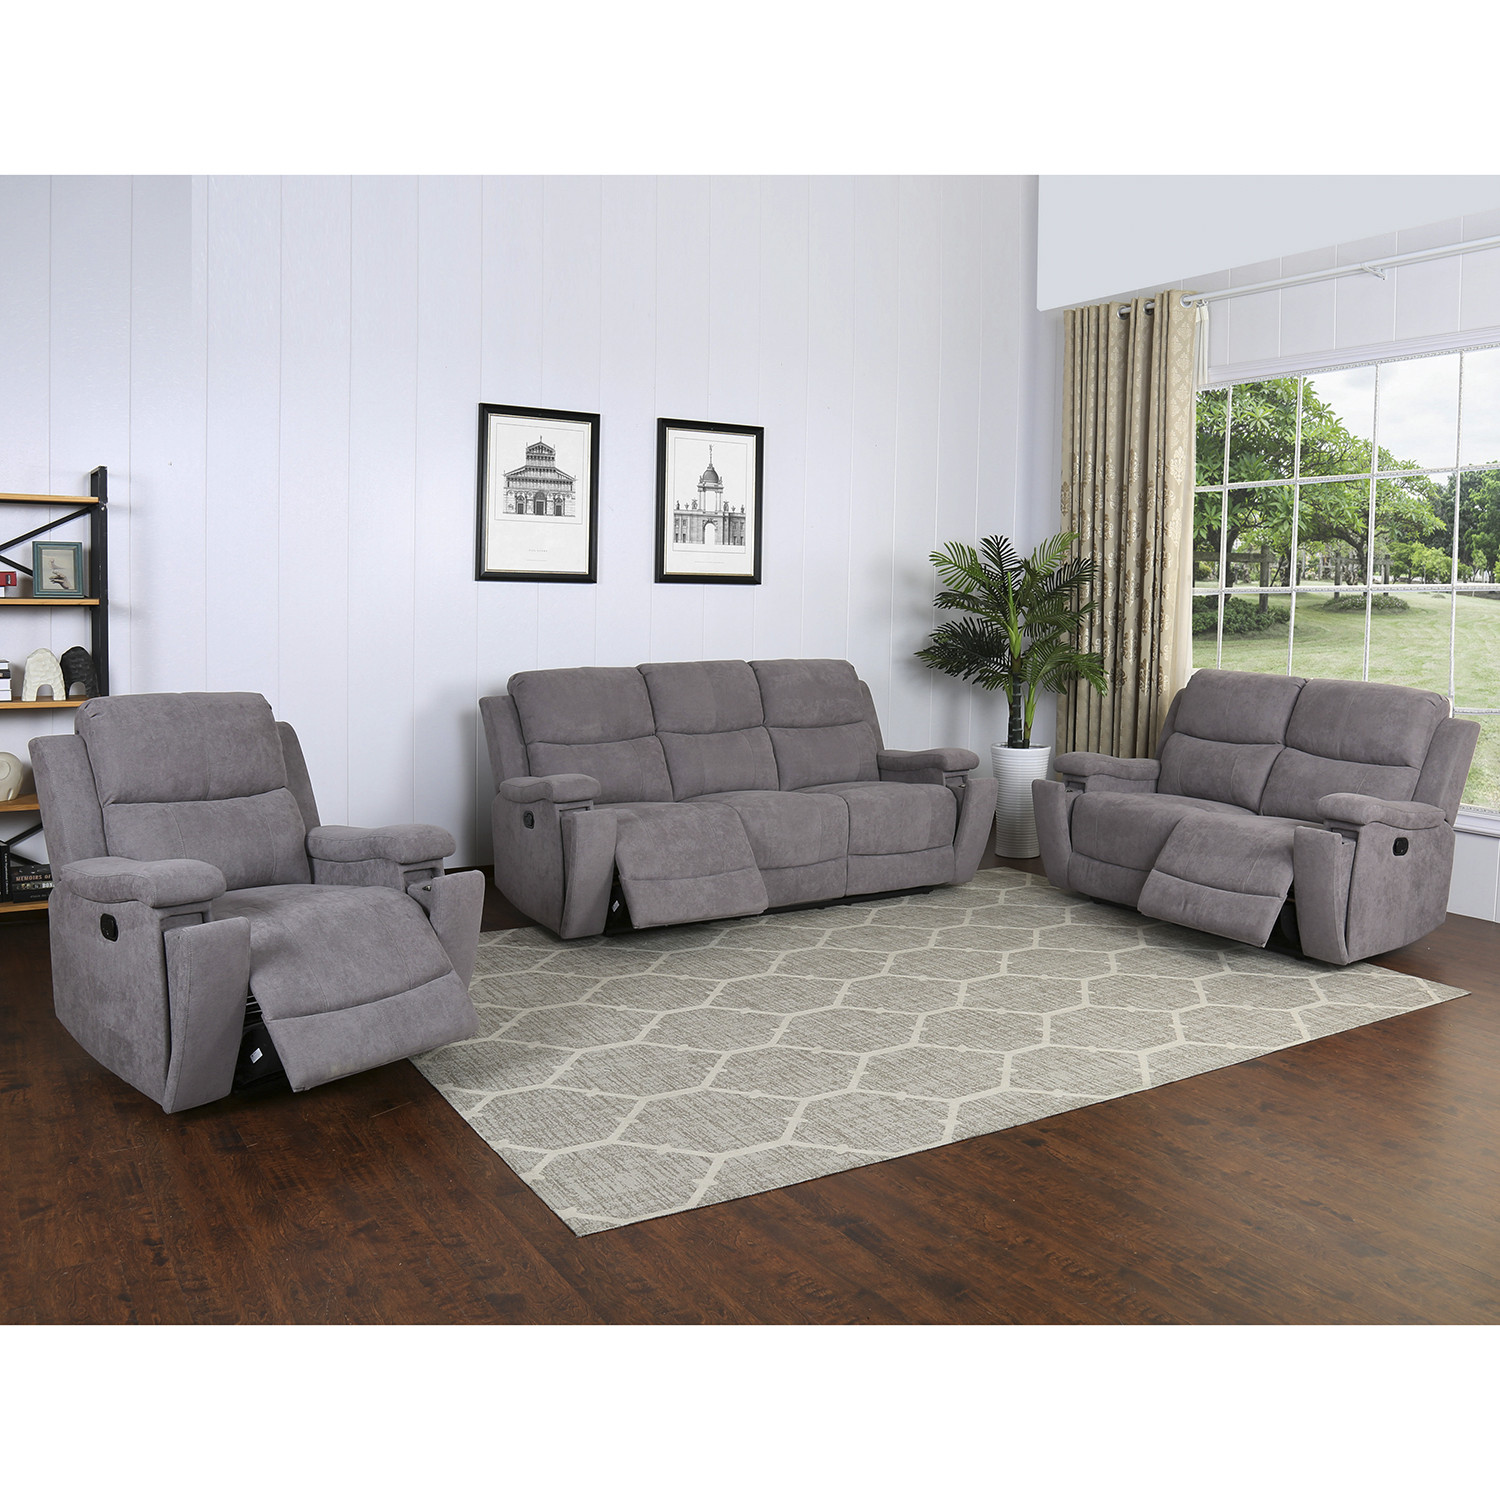 Ledbury 2 Seater Grey Fabric Manual Recliner Sofa Image 5